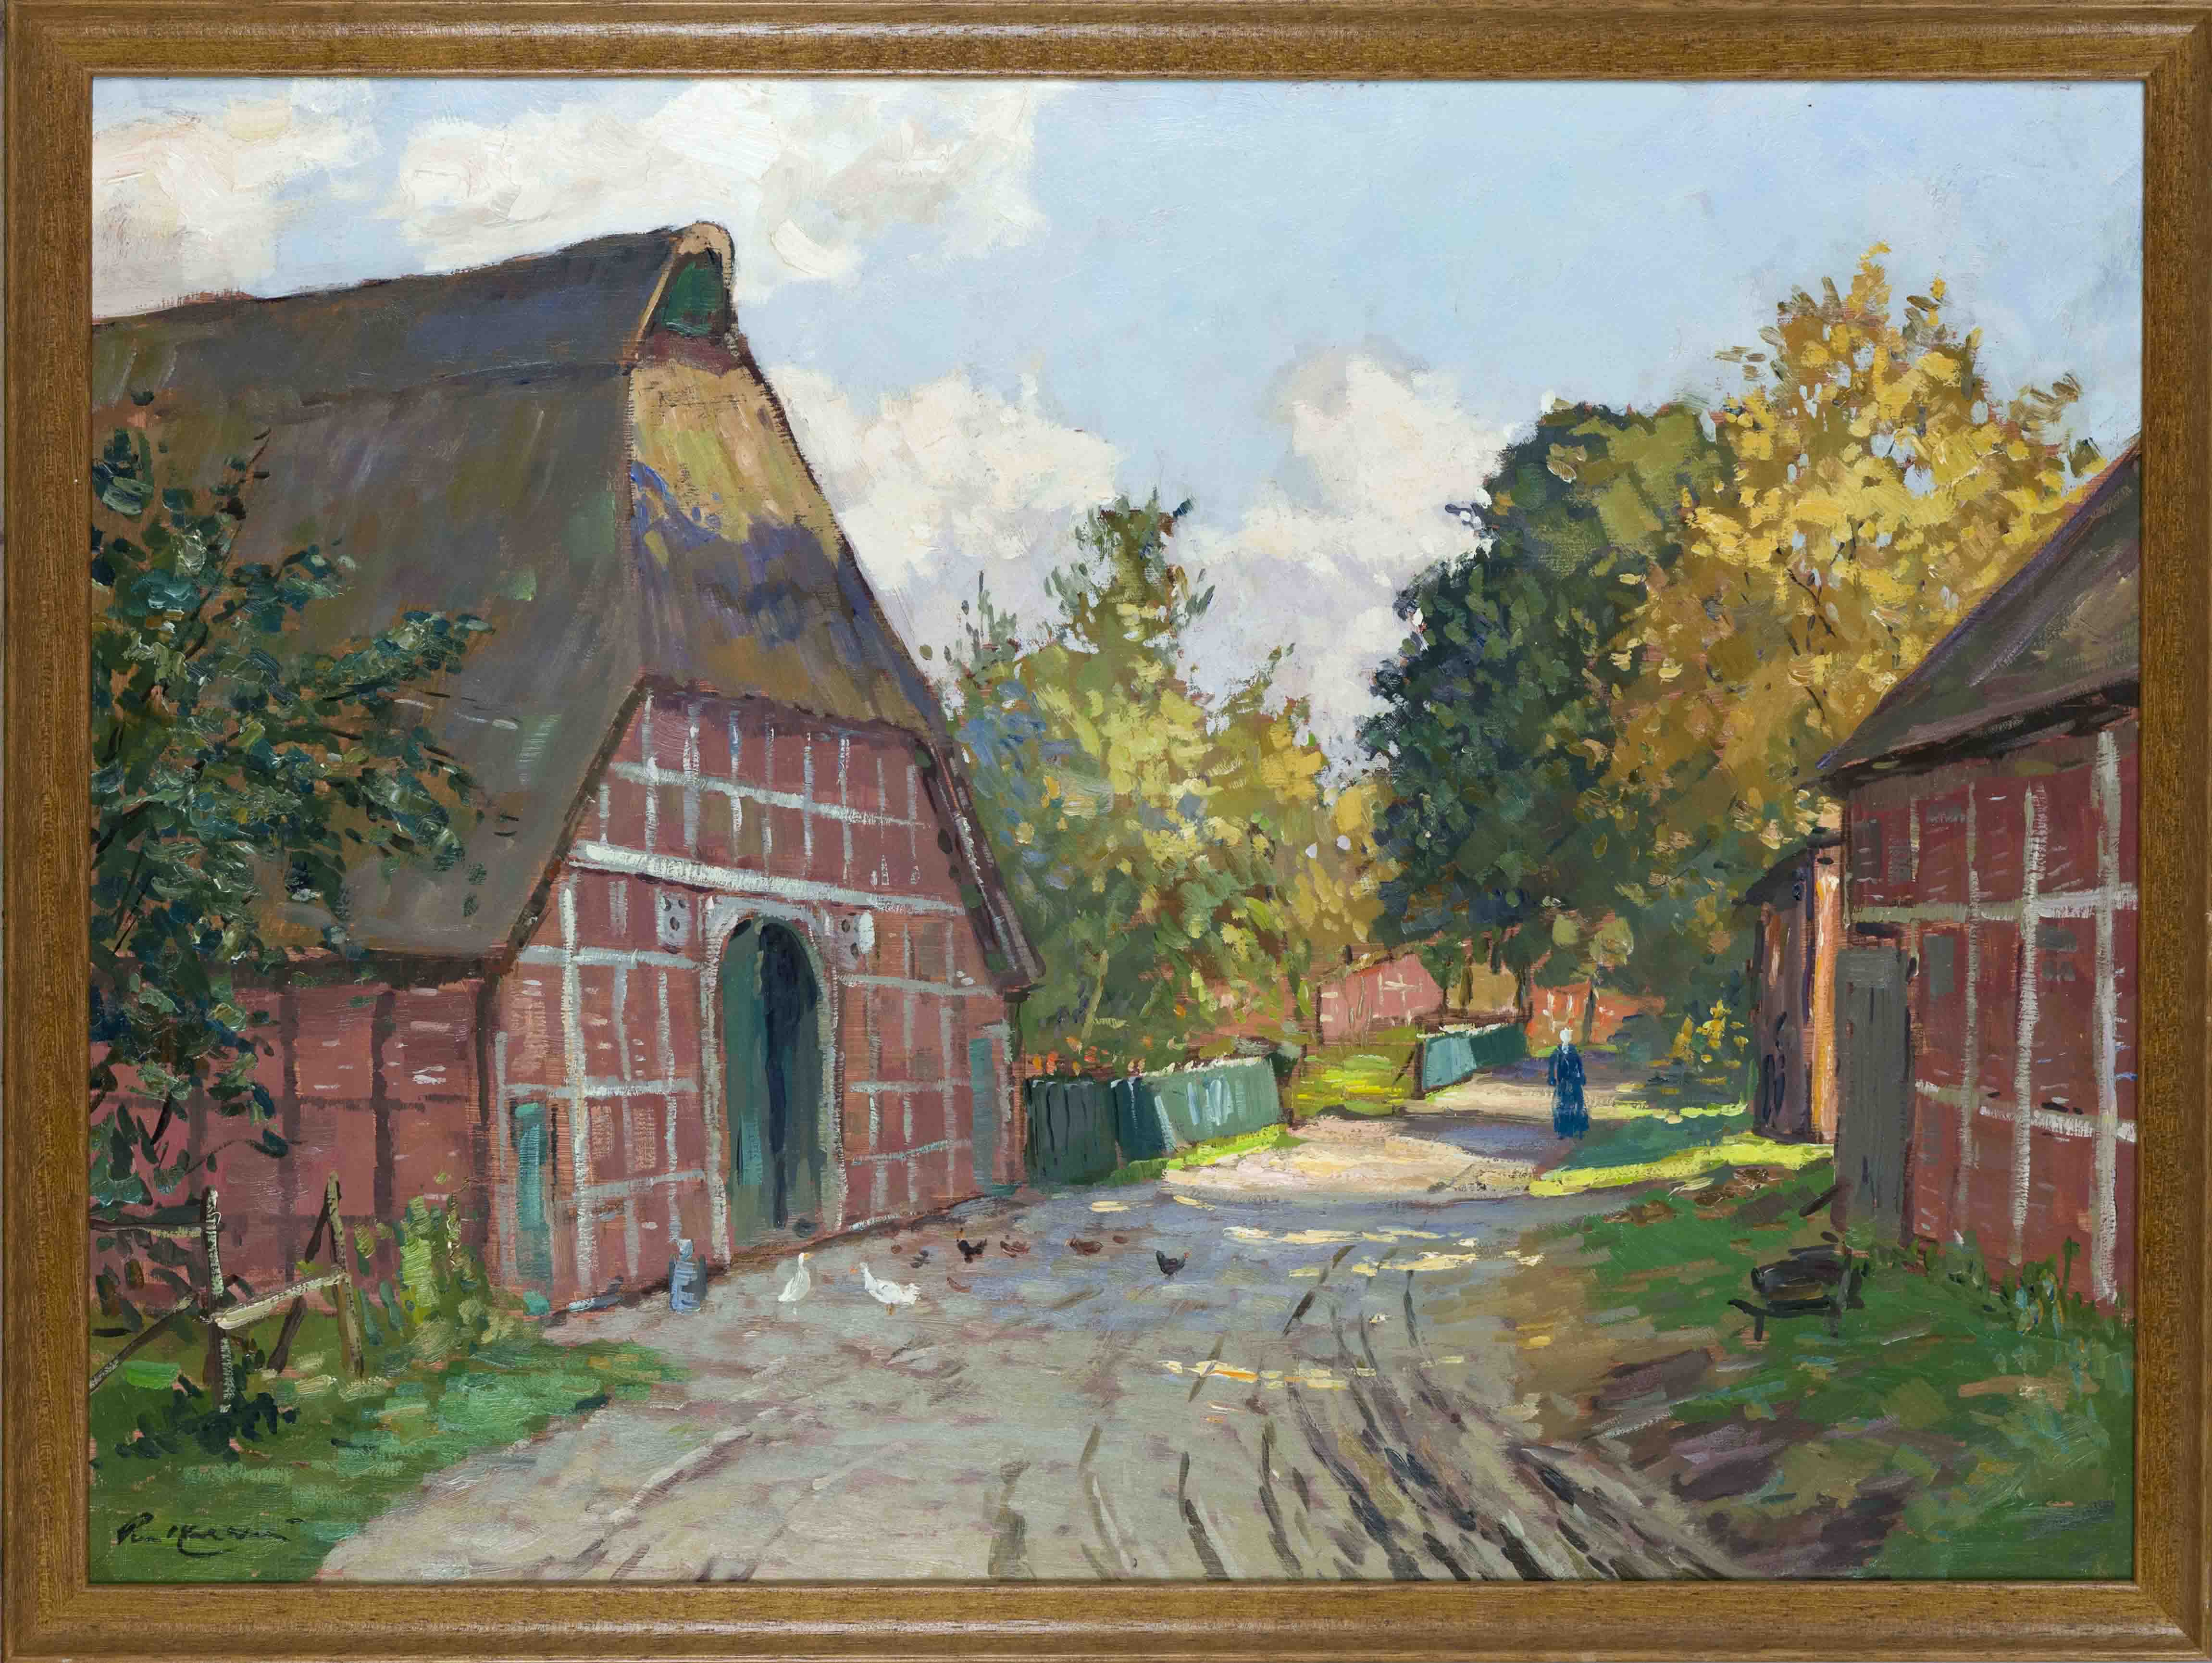 Paul Ernst Wilke (1894-1971), Bremerhaven landscape painter, Dorfstraße in Oese (Basdahl), 1958, oil